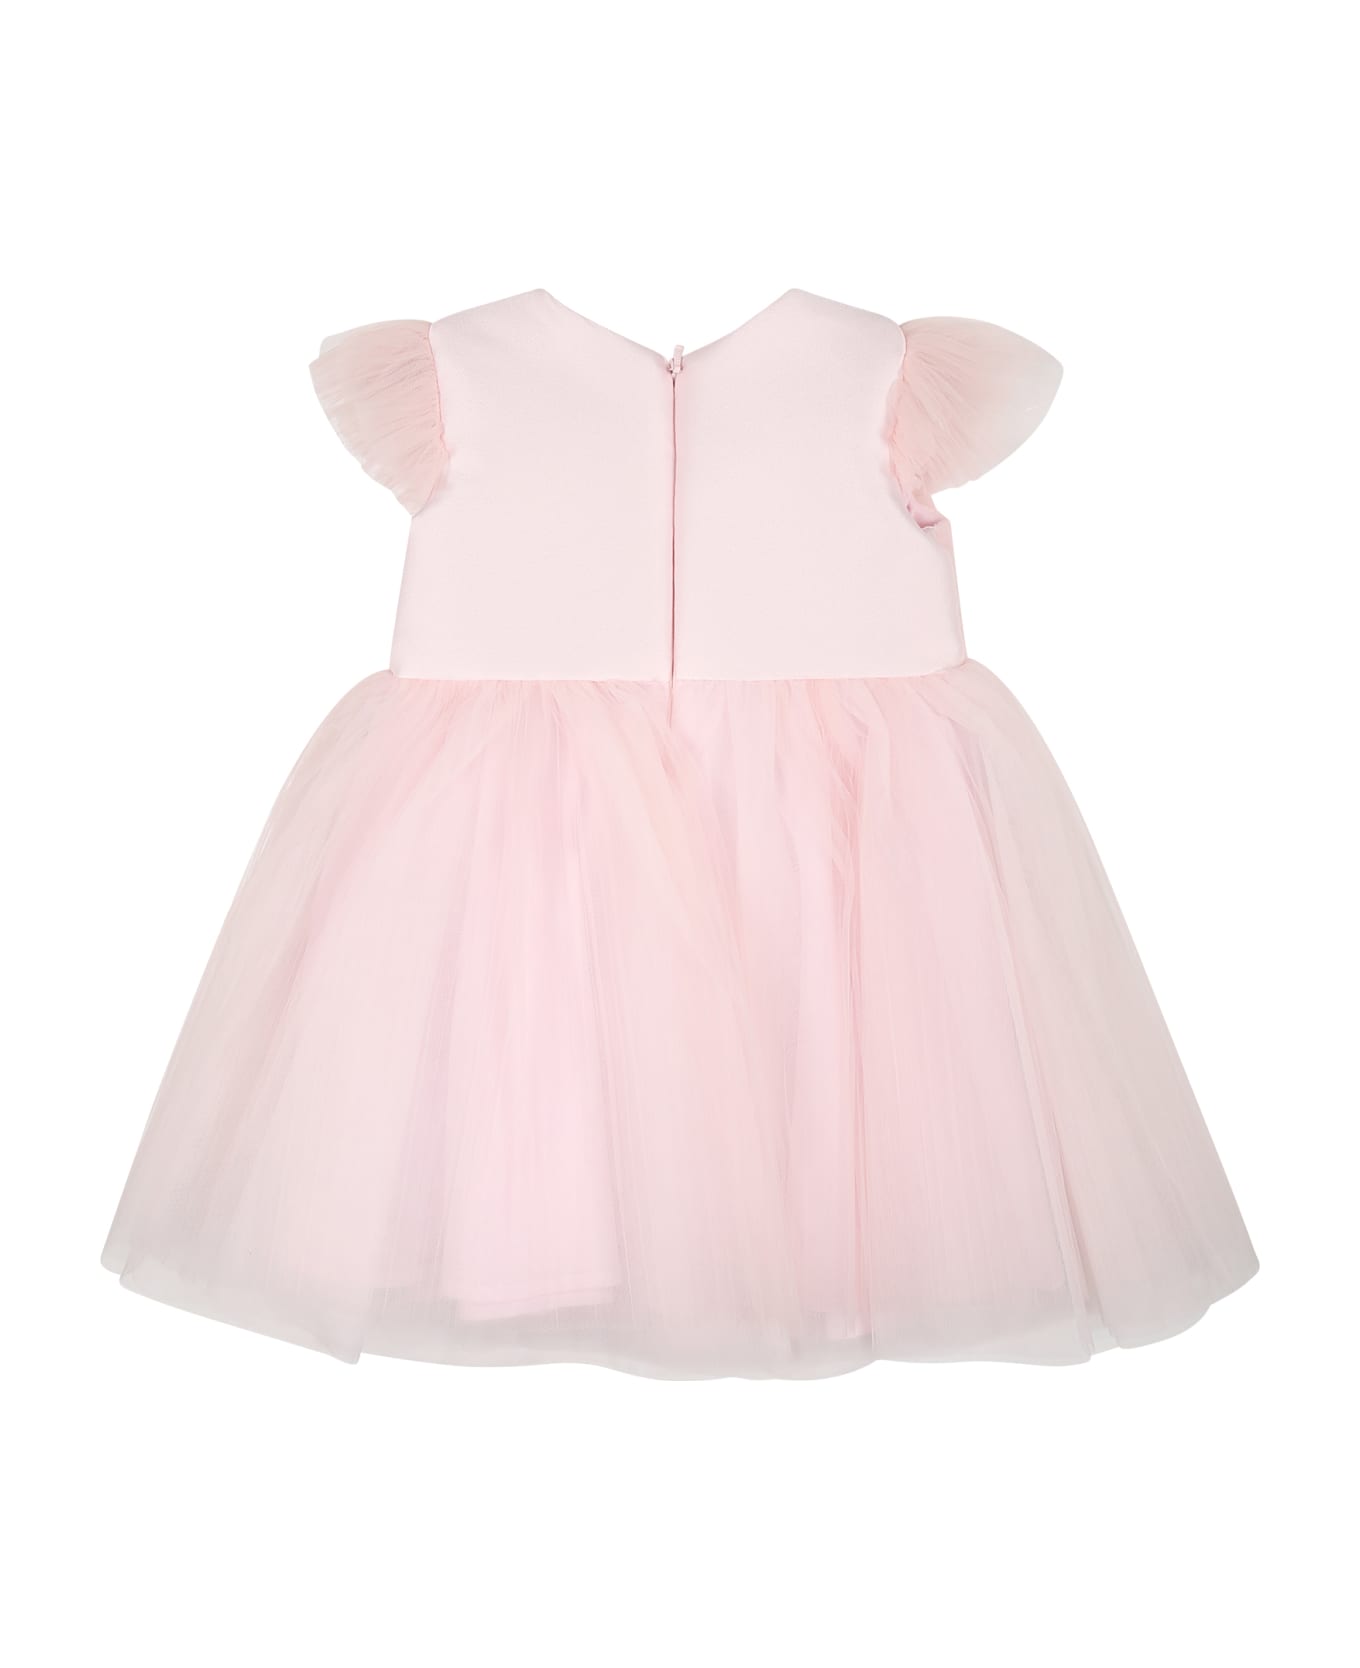 Monnalisa Pink Tulle Dress For Baby Girl - Pink